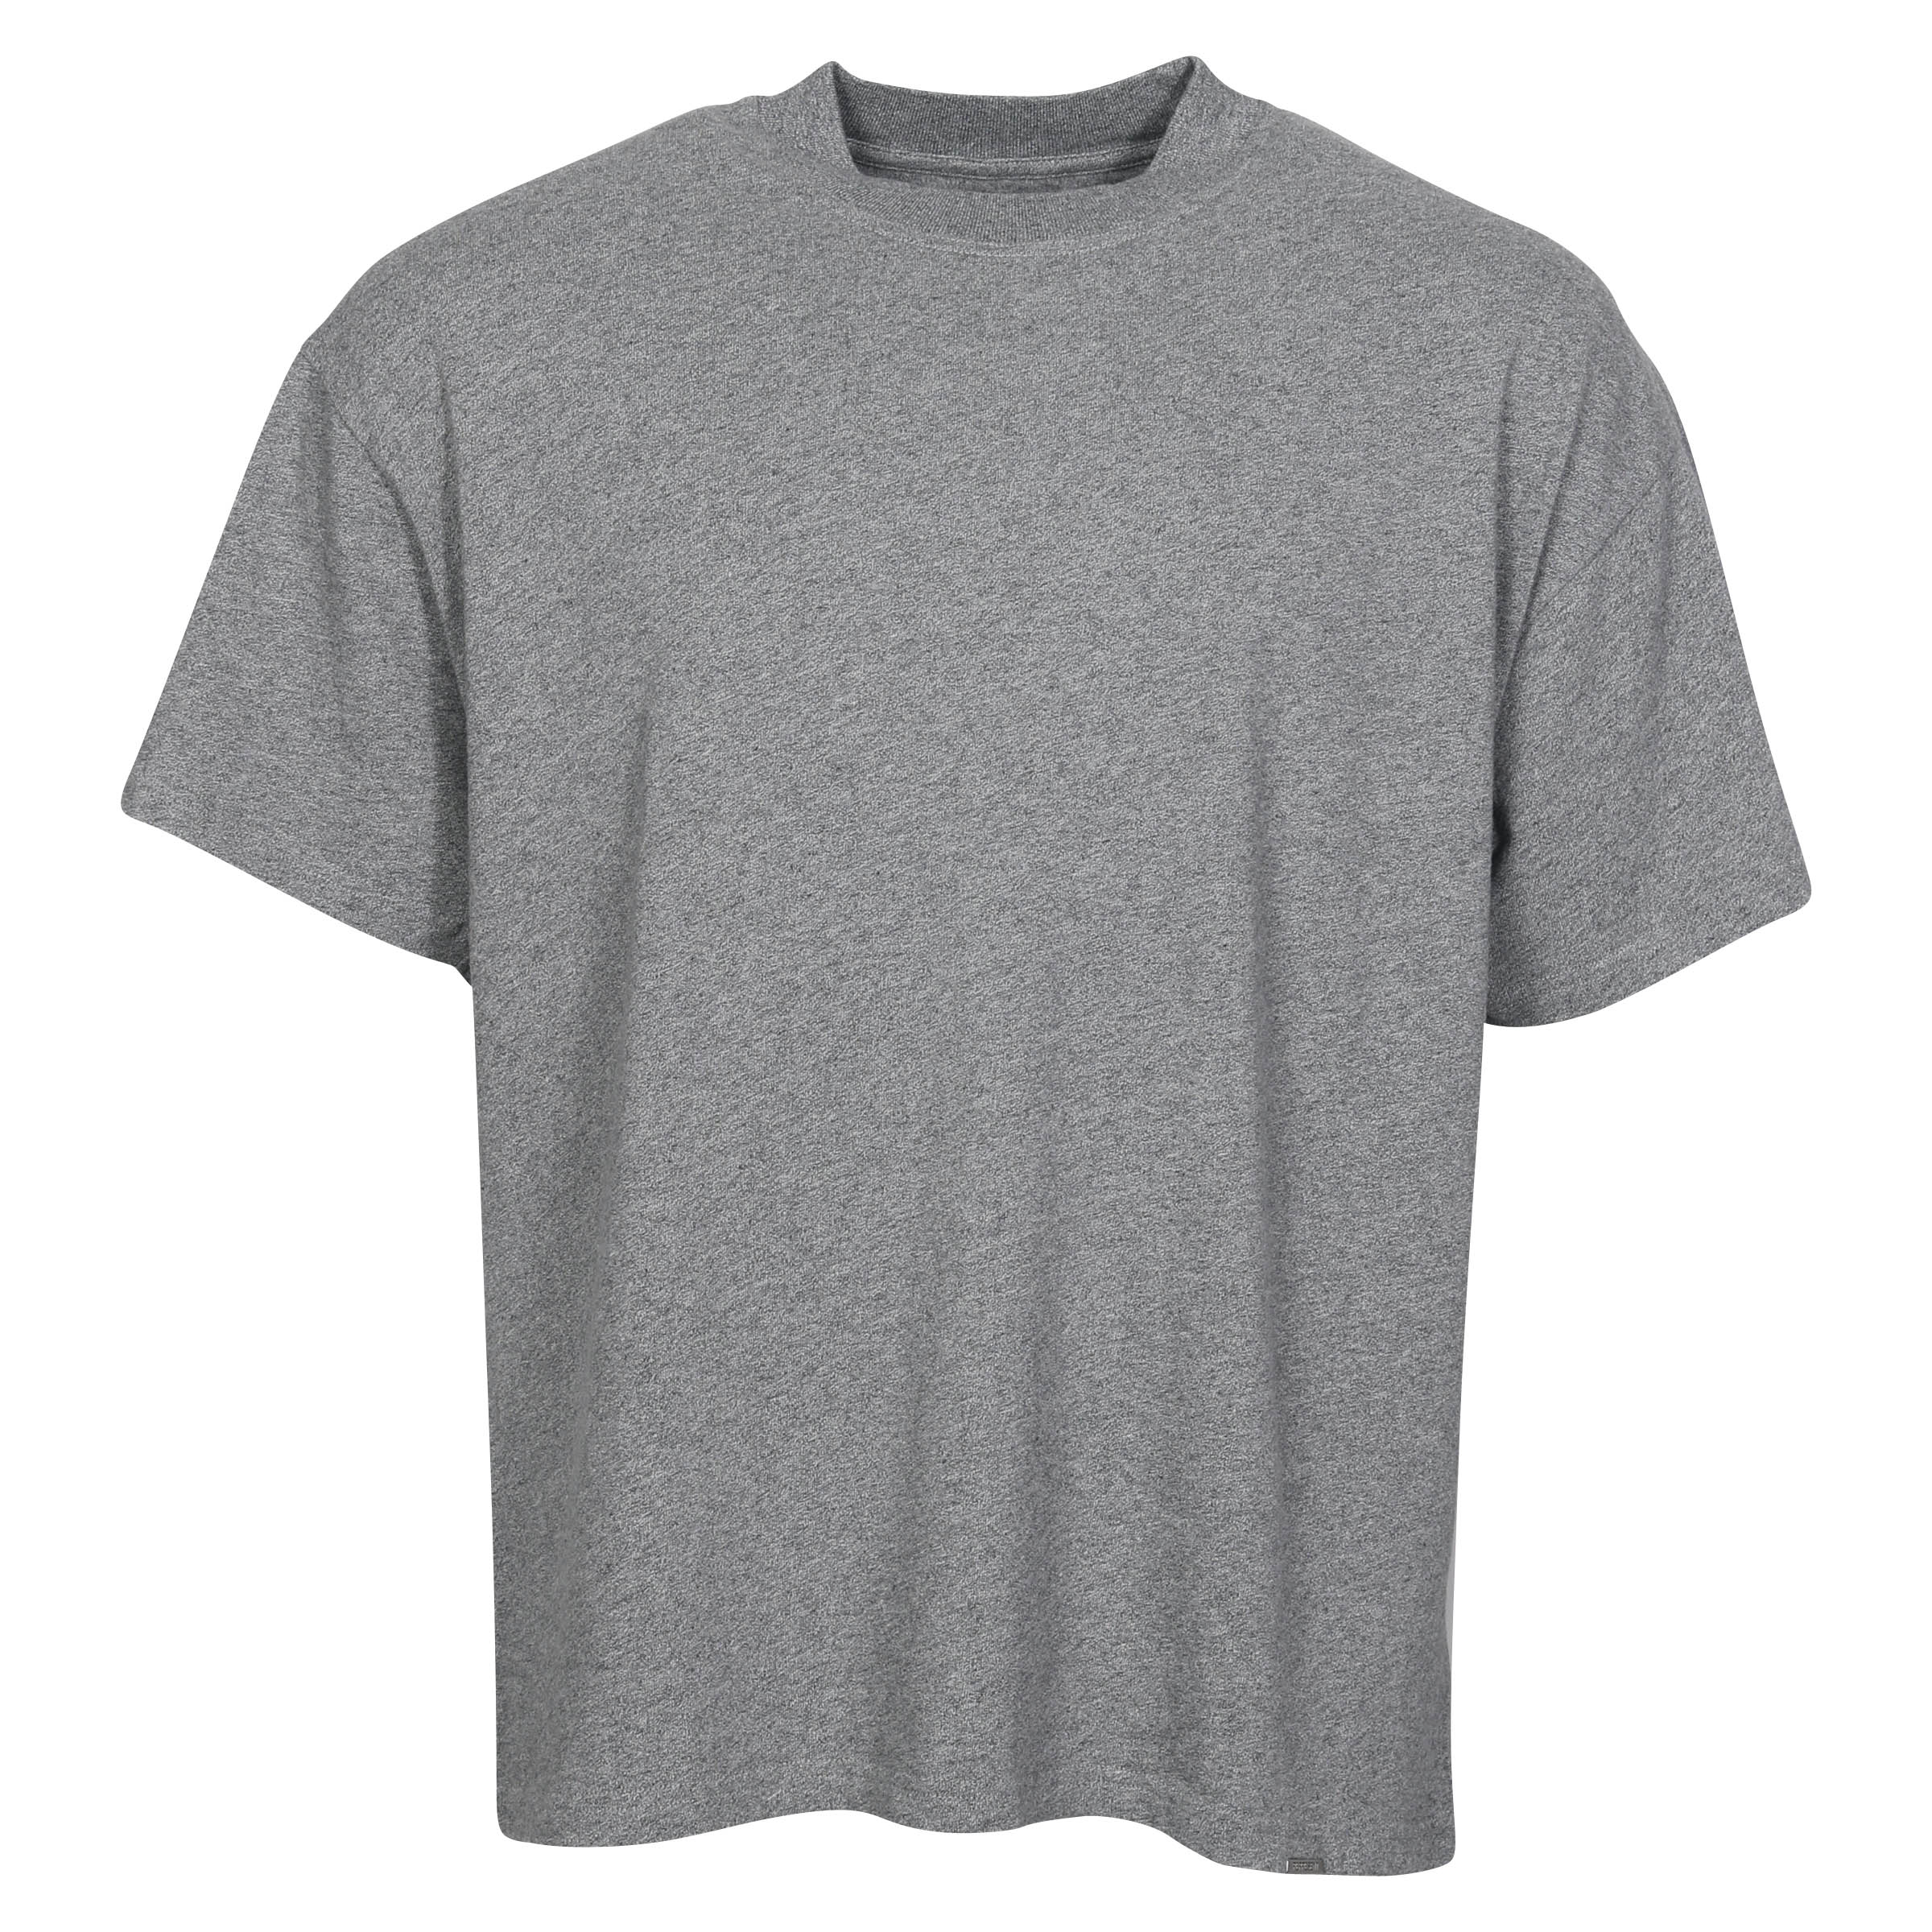 Represent Blank T-Shirt in Grey Melange